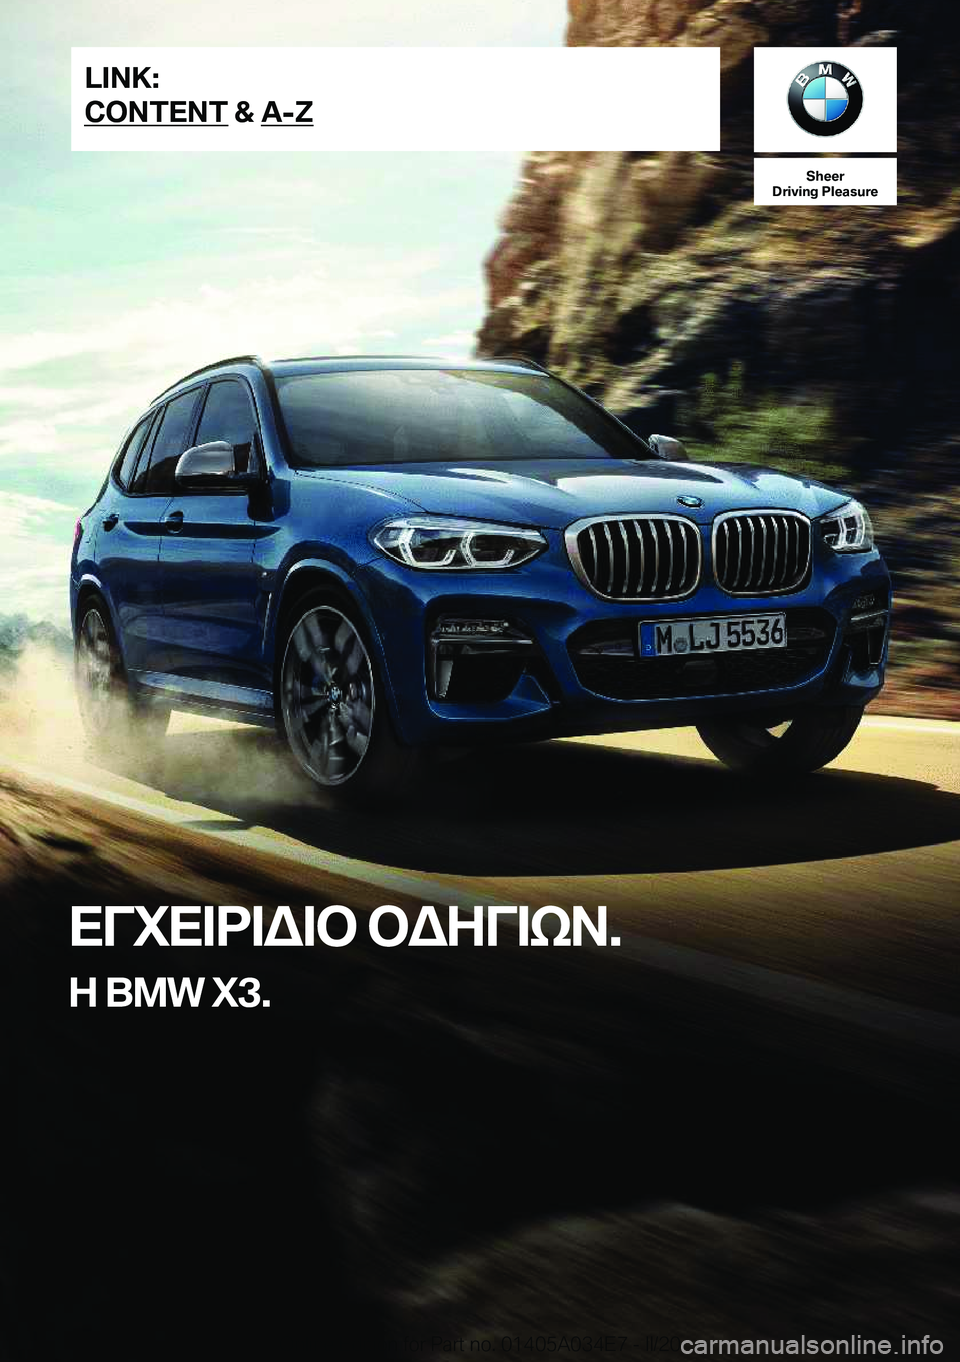 BMW X3 2020  ΟΔΗΓΌΣ ΧΡΉΣΗΣ (in Greek) �S�h�e�e�r
�D�r�i�v�i�n�g��P�l�e�a�s�u�r�e
XViX=d=W=b�bWZV=kA�.
Z��B�M�W��X�3�.�L�I�N�K�:
�C�O�N�T�E�N�T��&��A�-�Z�O�n�l�i�n�e��E�d�i�t�i�o�n��f�o�r��P�a�r�t��n�o�.��0�1�4